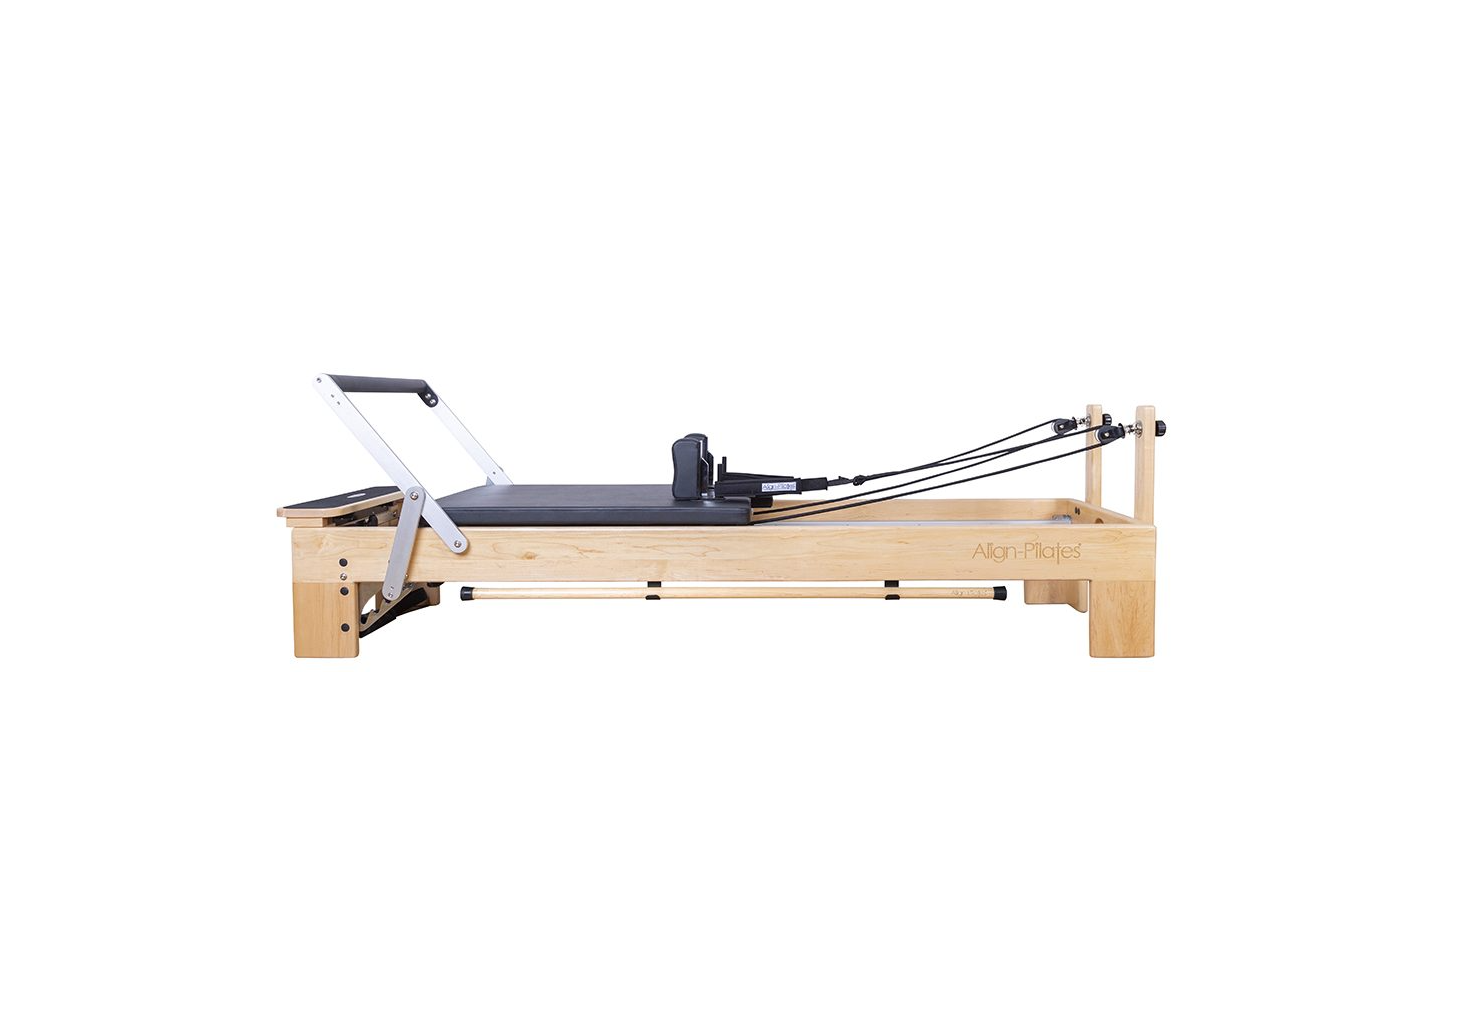 Align Pilates M8 Pro Maple Wood Reformer on Sale at Gym Marine